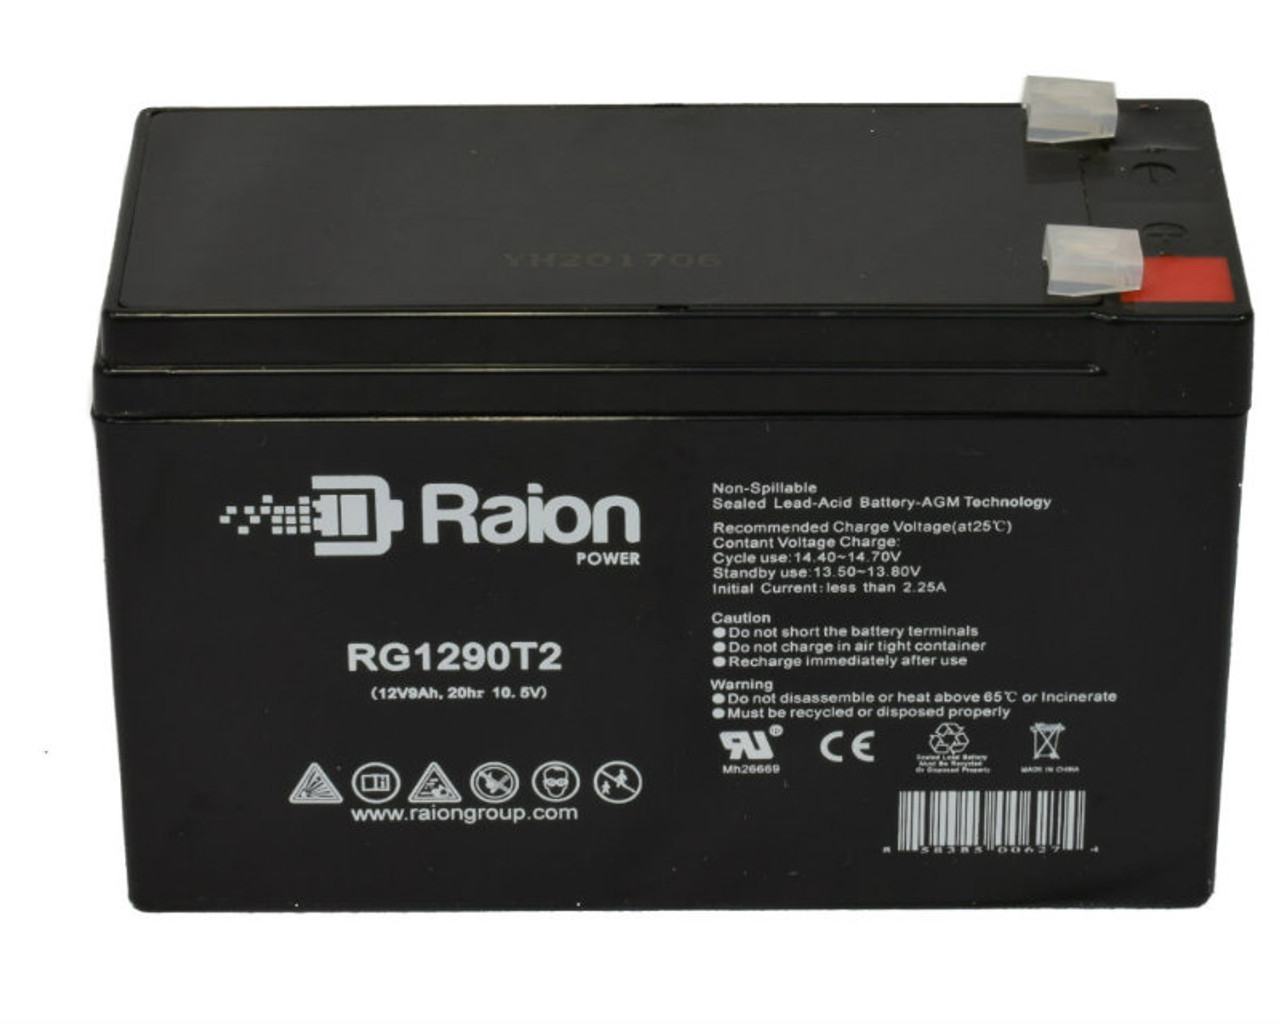 Raion Power RG1290T2 12V 9Ah Lead Acid Battery for Xport SLX Scooter